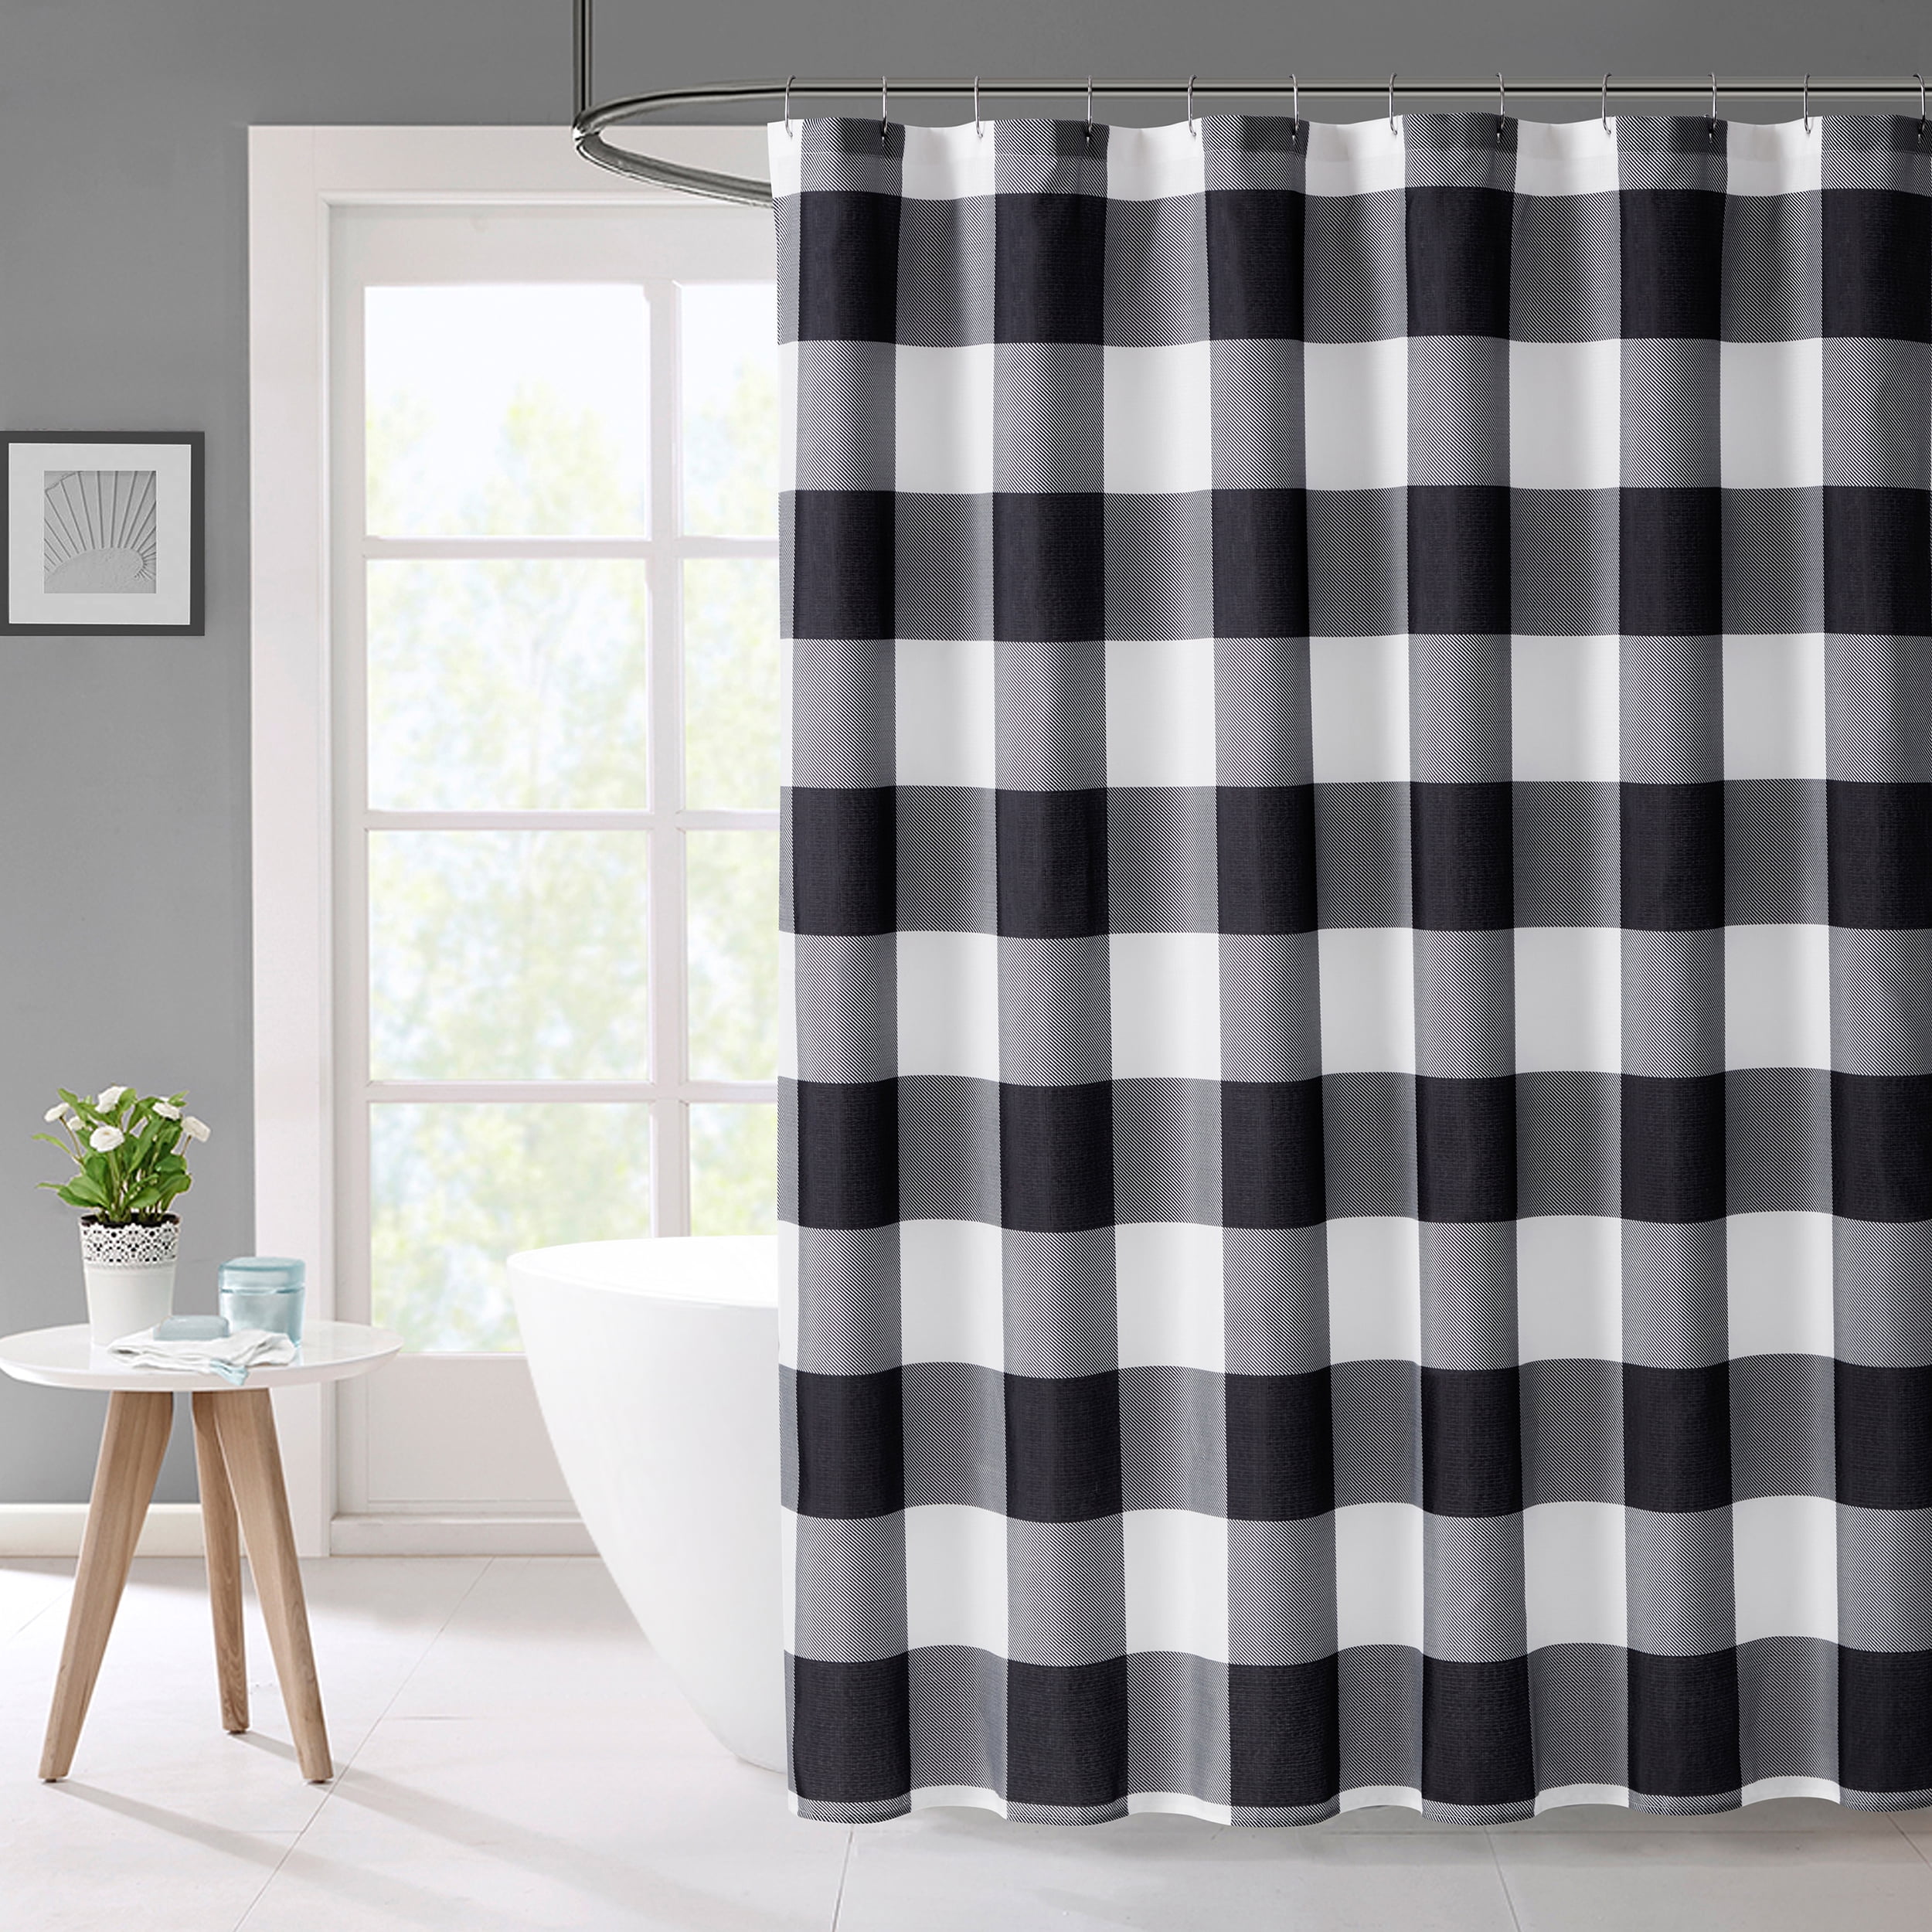 72x72'' Purple Feathers & Blue Flowers Bathroom Waterproof Shower Curtain Liner 